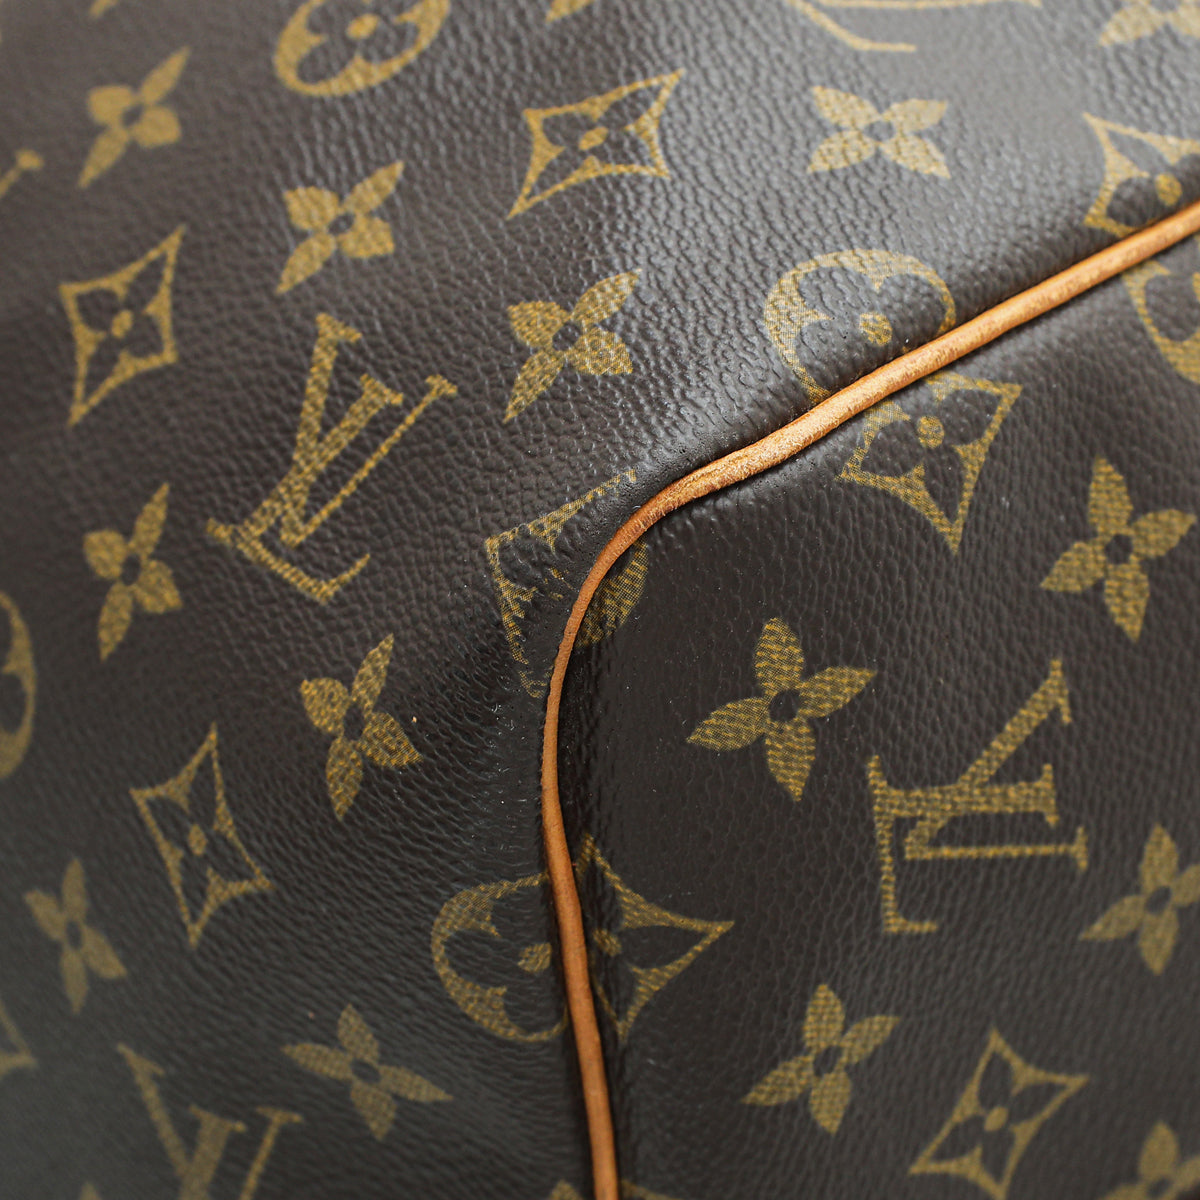 Louis Vuitton Brown Monogram Keepall Bandouliere 55 Bag